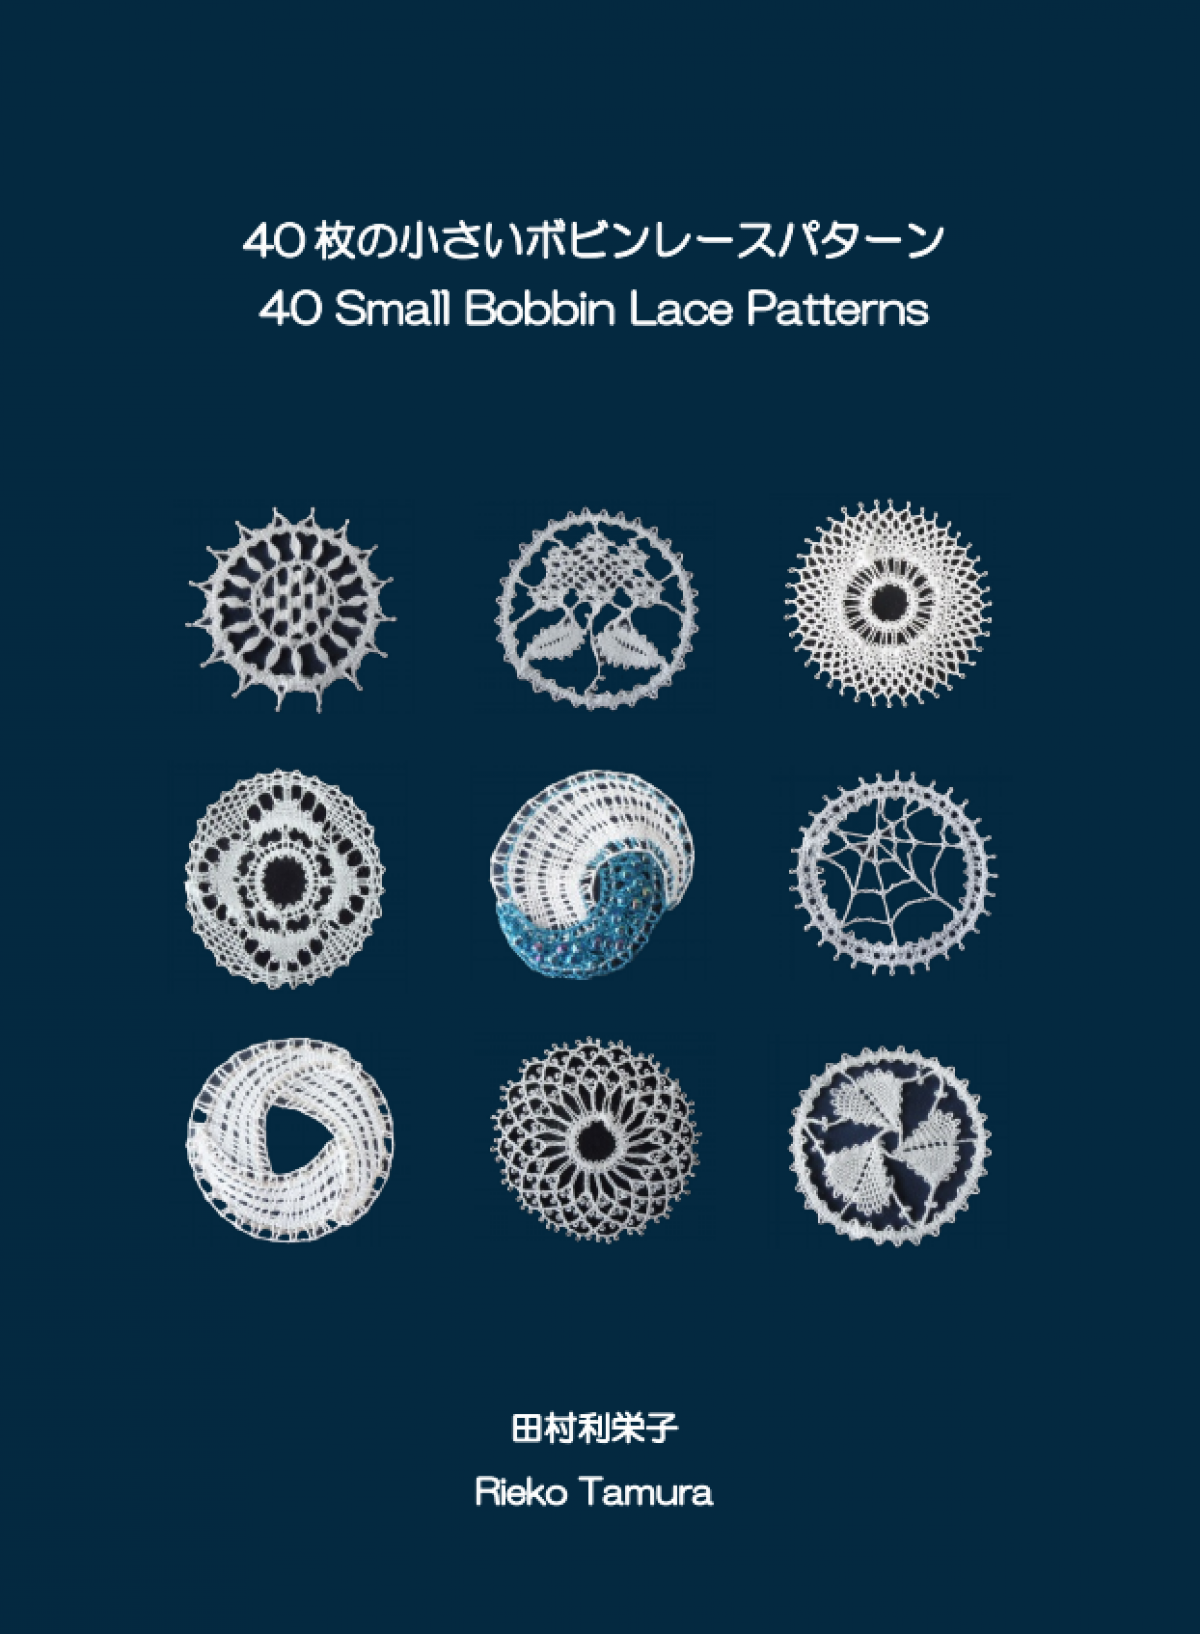 40 Small Bobbin Lace Patterns by Rieko Tamura